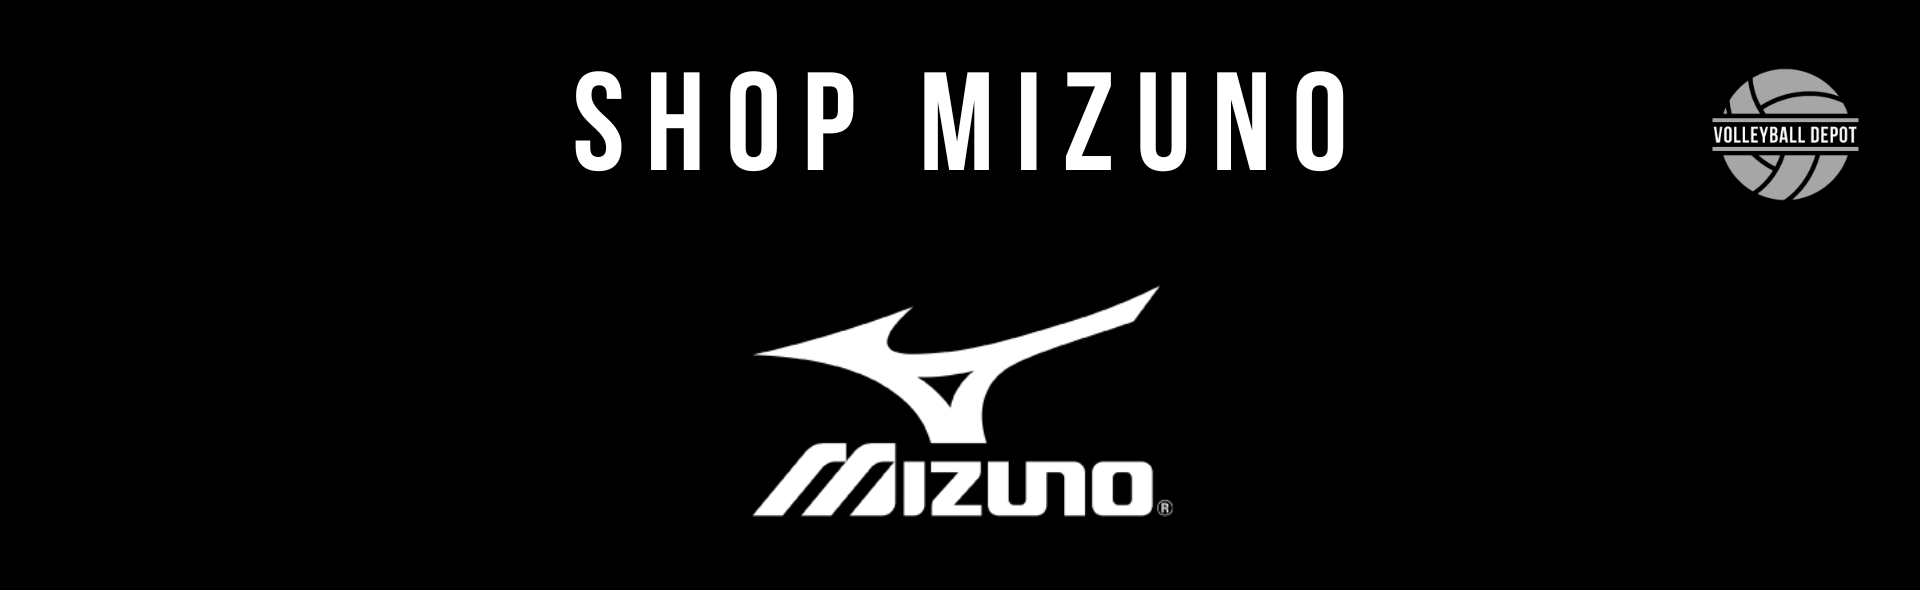 shop mizuno